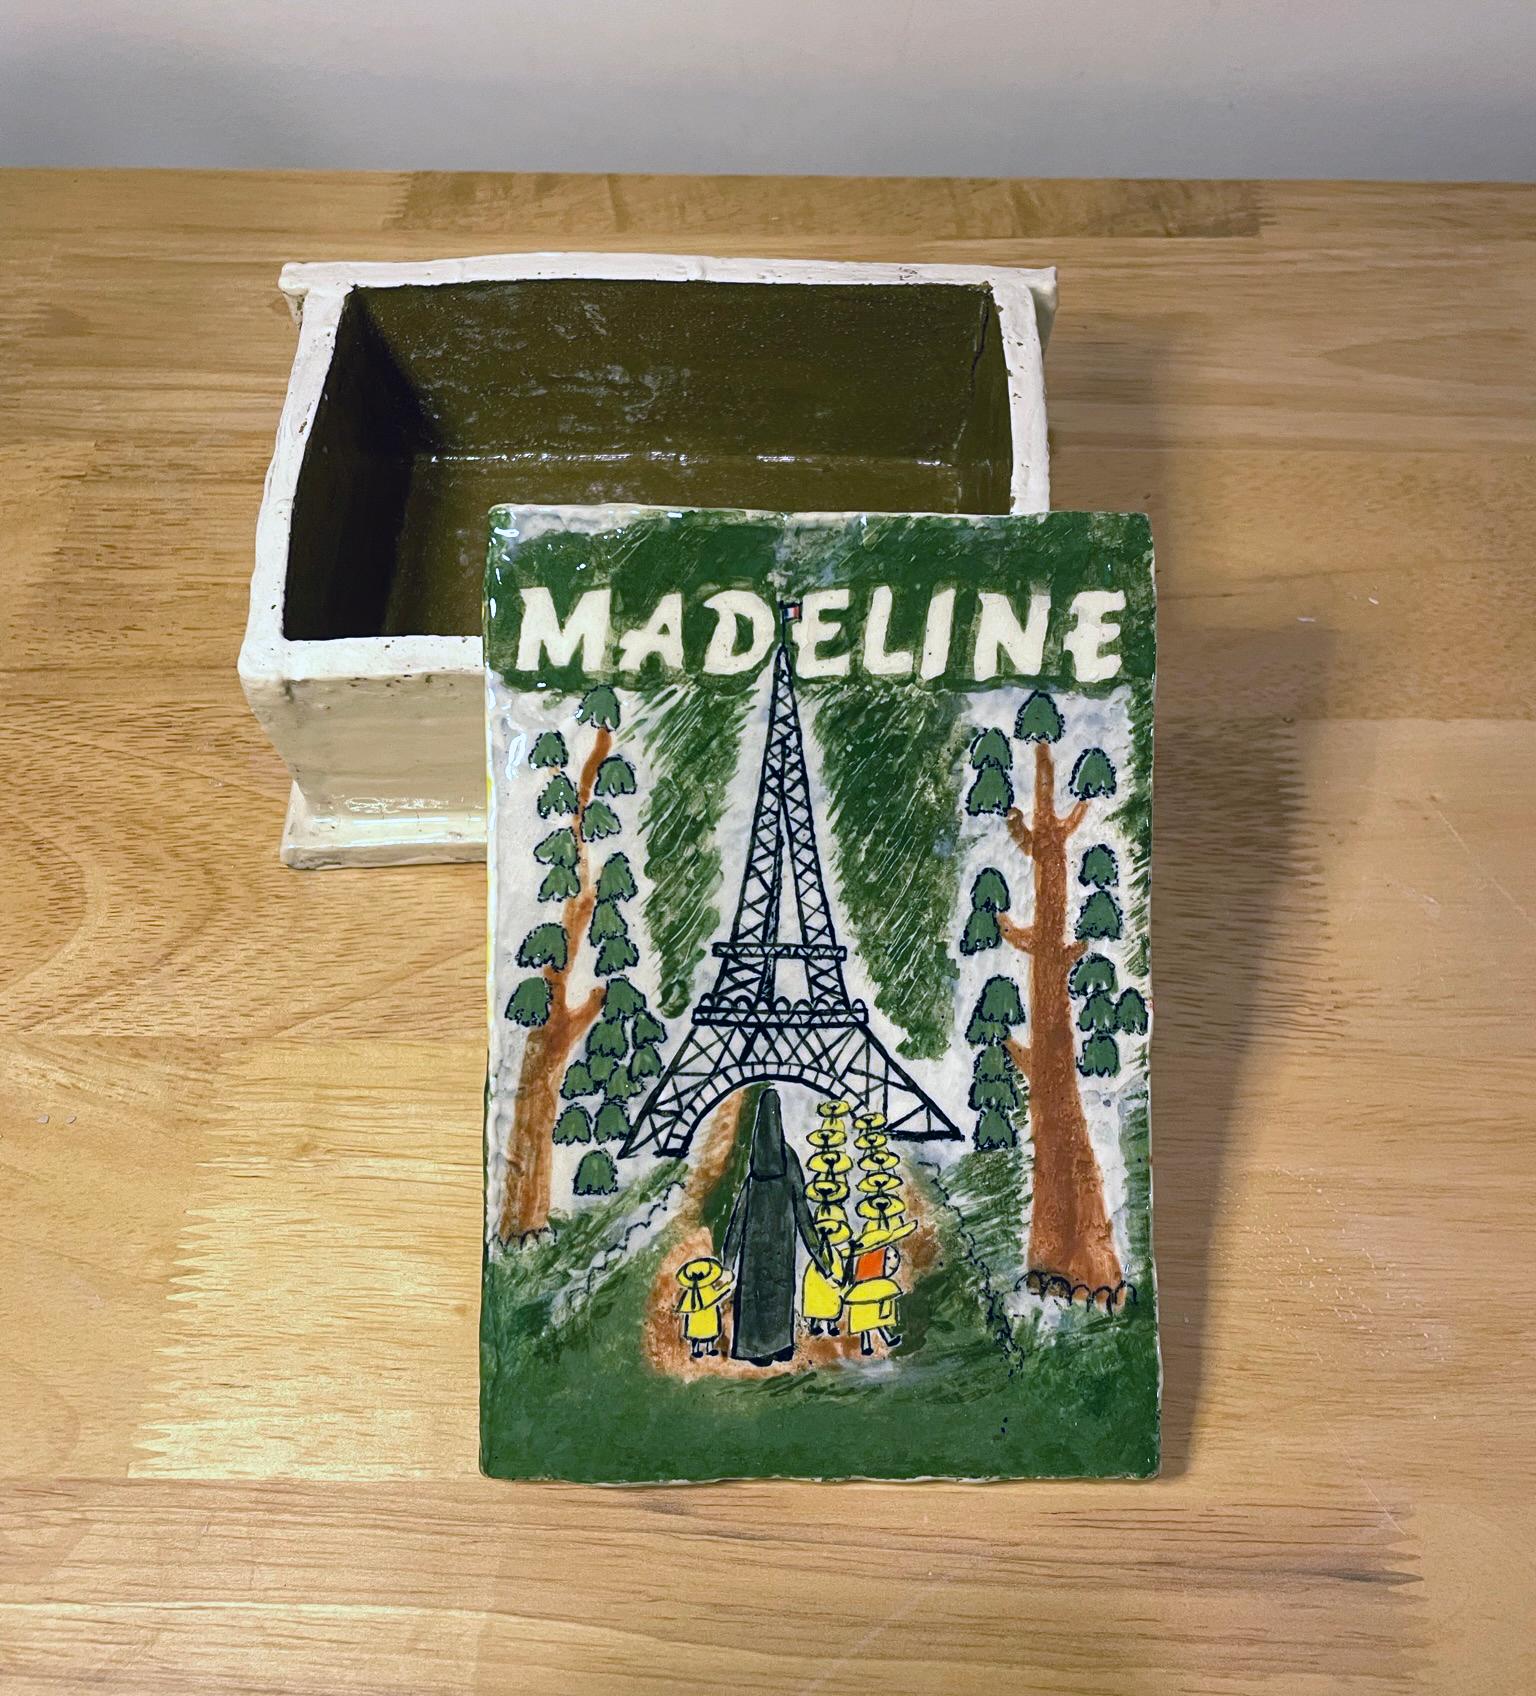 Glazed Madeline Book Box For Sale